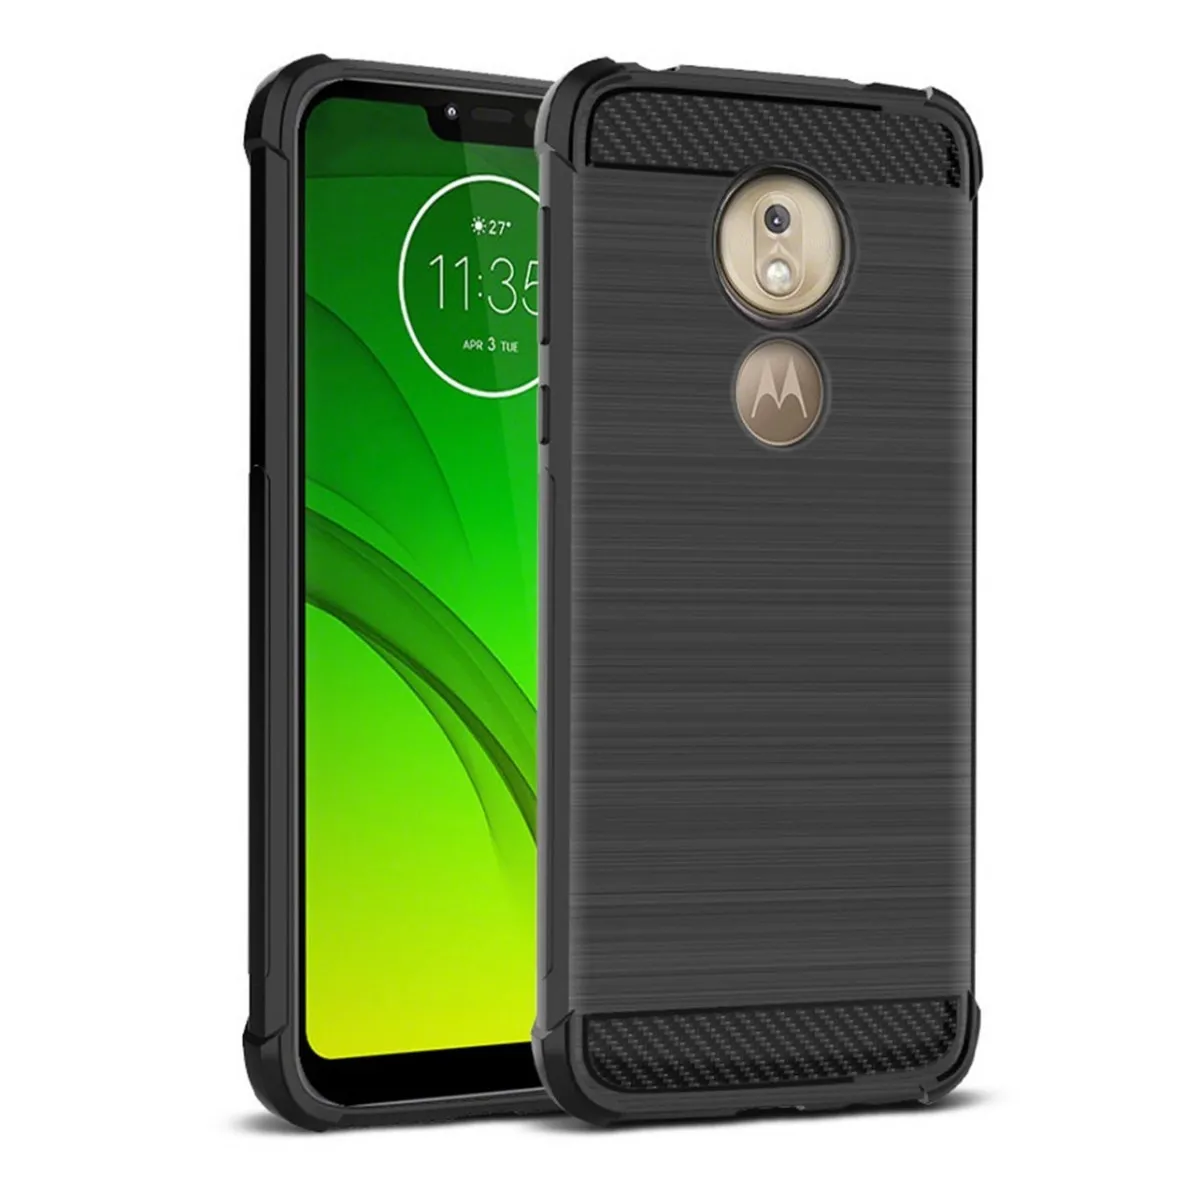 Funda Gel Tpu Anti-Shock Carbon Negra para Motorola Moto G7 Play